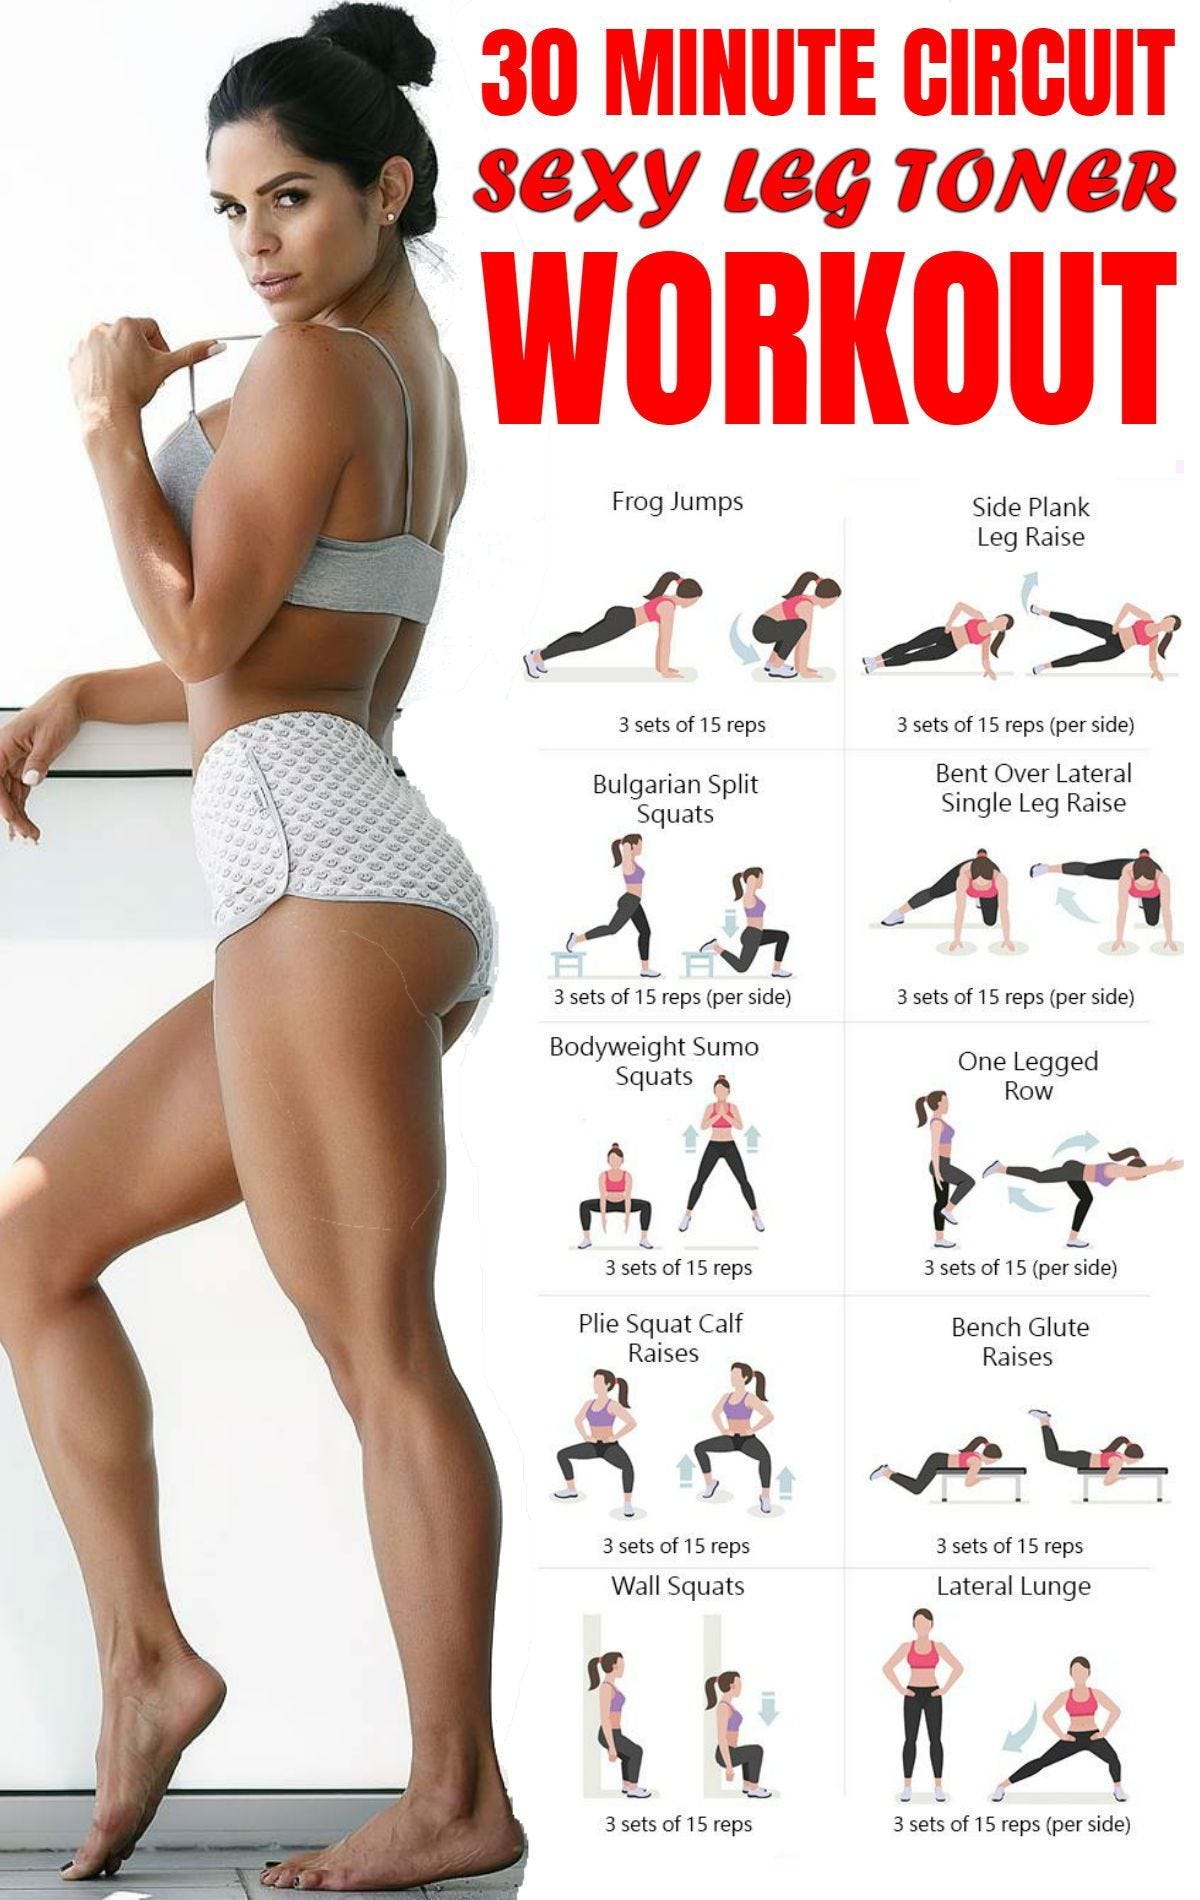 12 Ways to Get a Good Leg Workout at Home | by ADEYEMI OPEYEMI | Medium